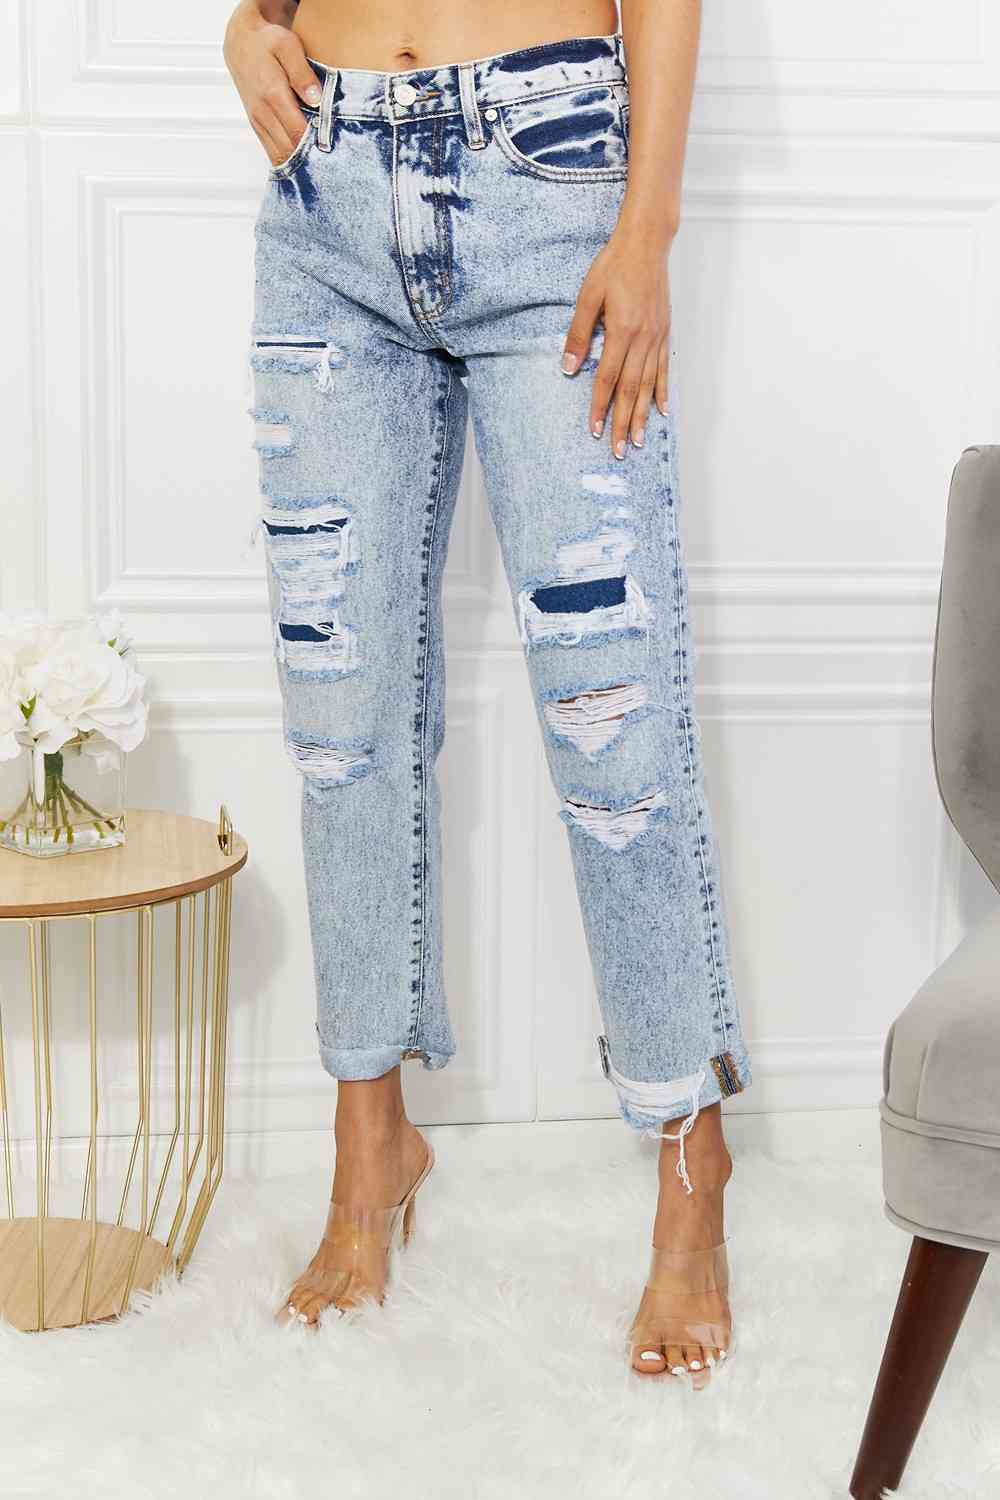 TEEK - K. Kendra High Rise Distressed Straight Jeans JEANS TEEK Trend 1(25)  